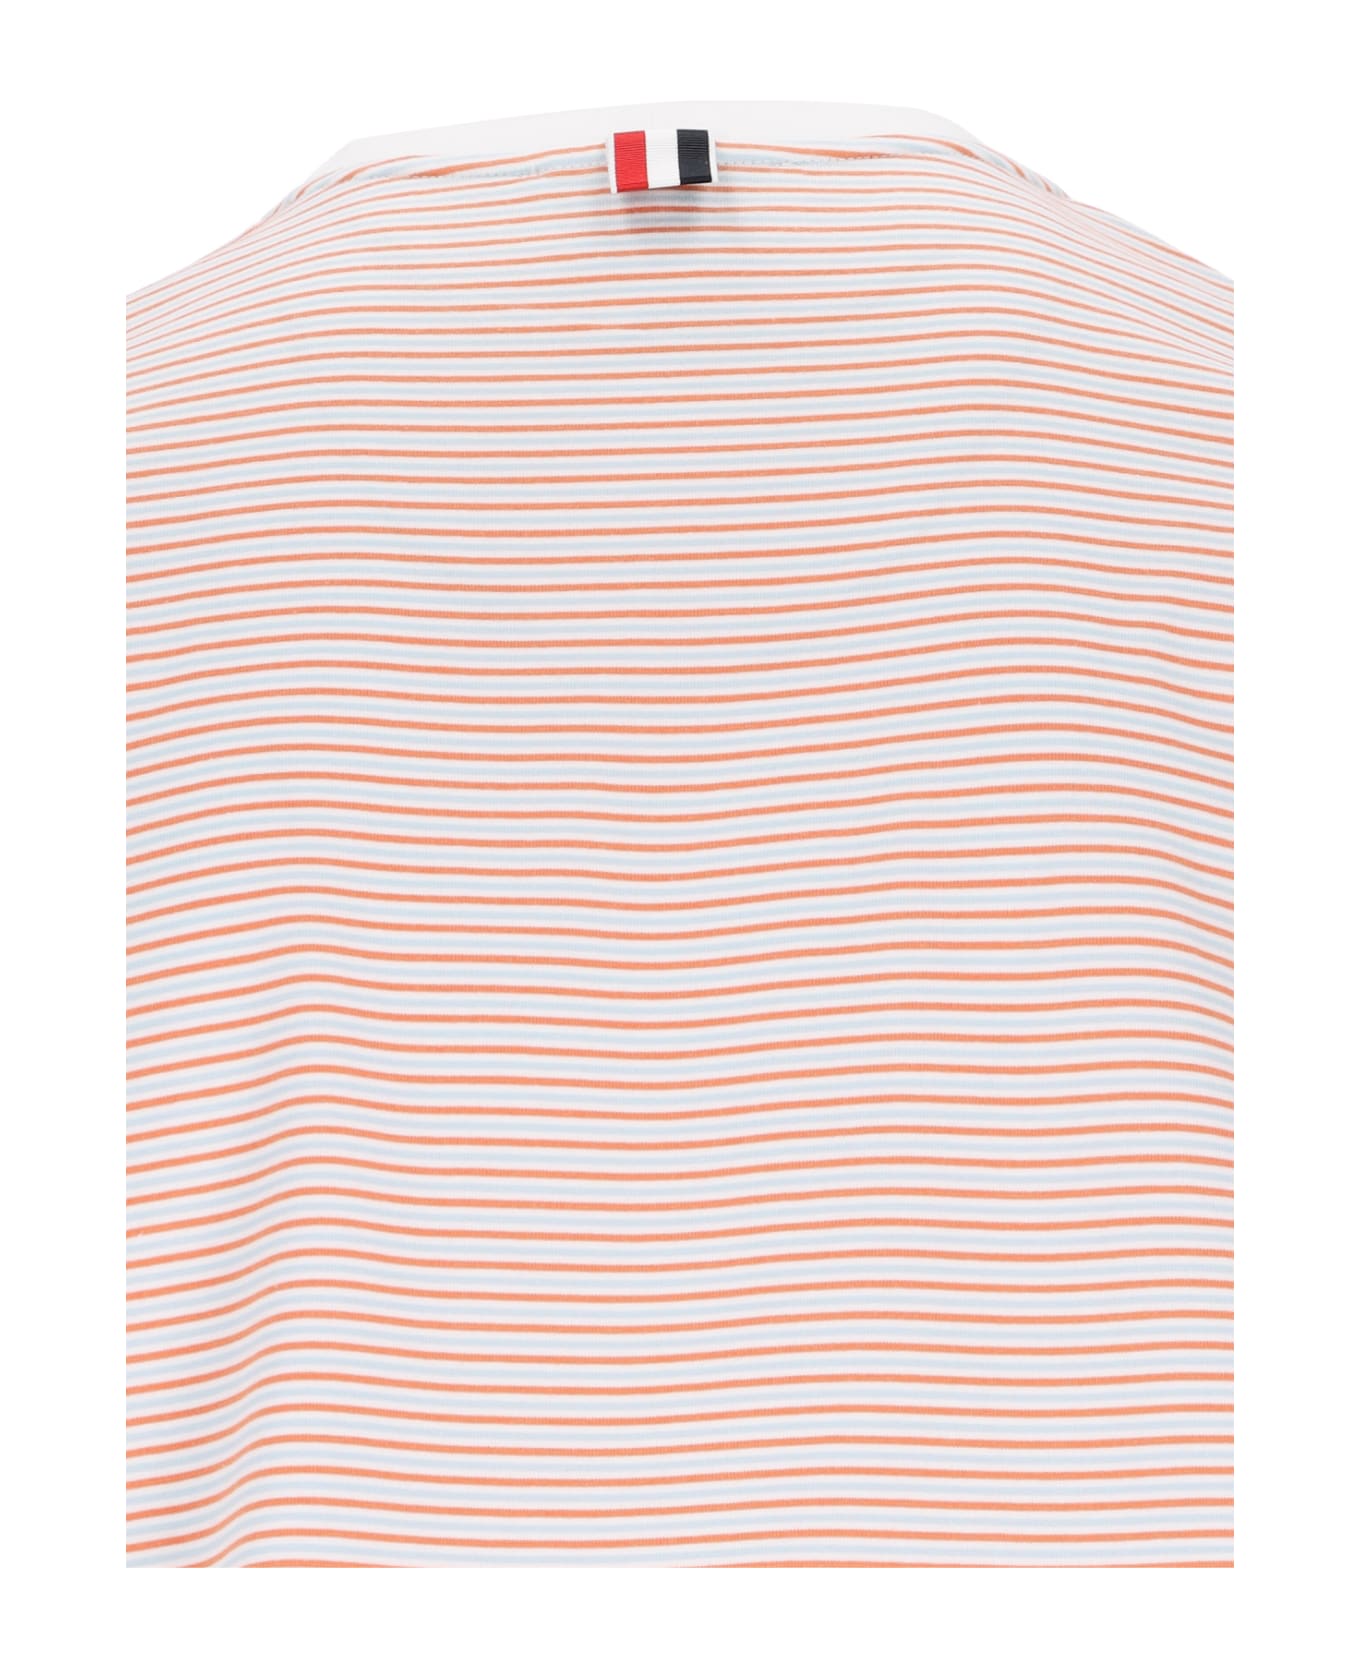 Thom Browne Oversized Cotton Pocket T-shirt - Orange